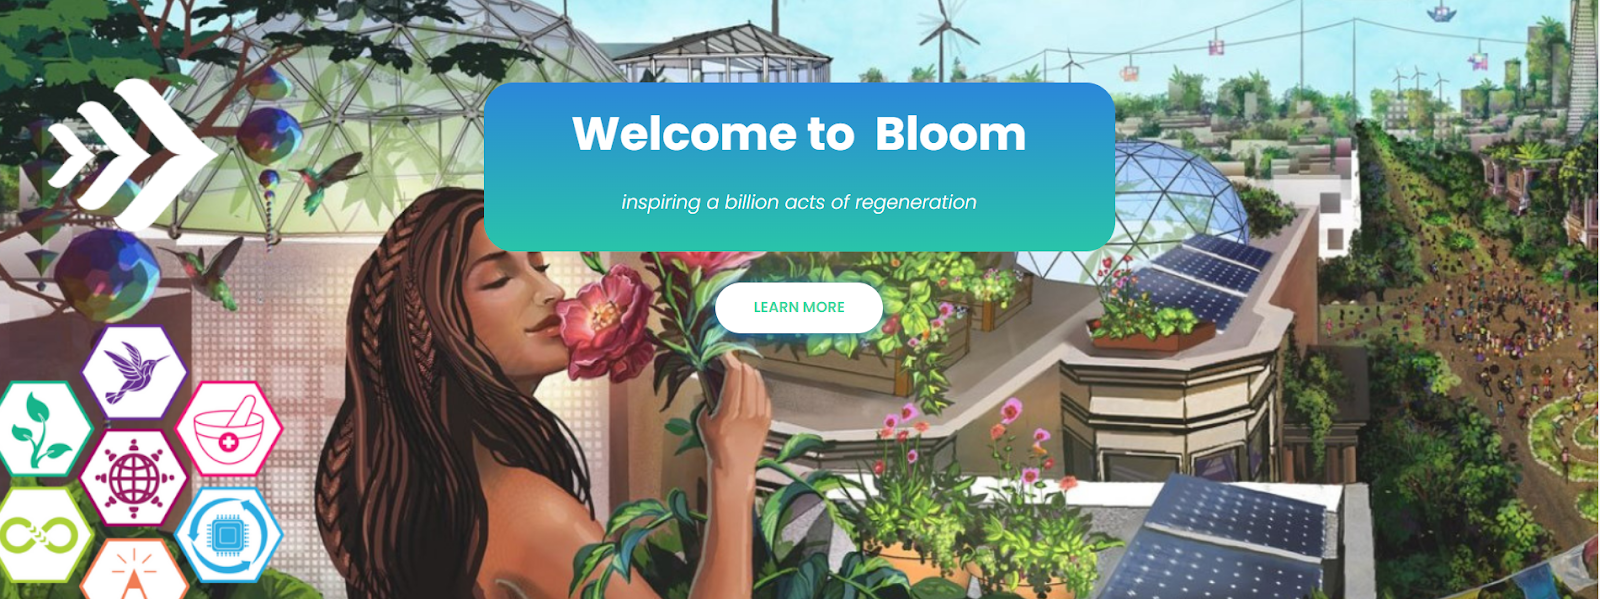 Bloom Networks Landing Page Header (http://bloomnetwork.org/)